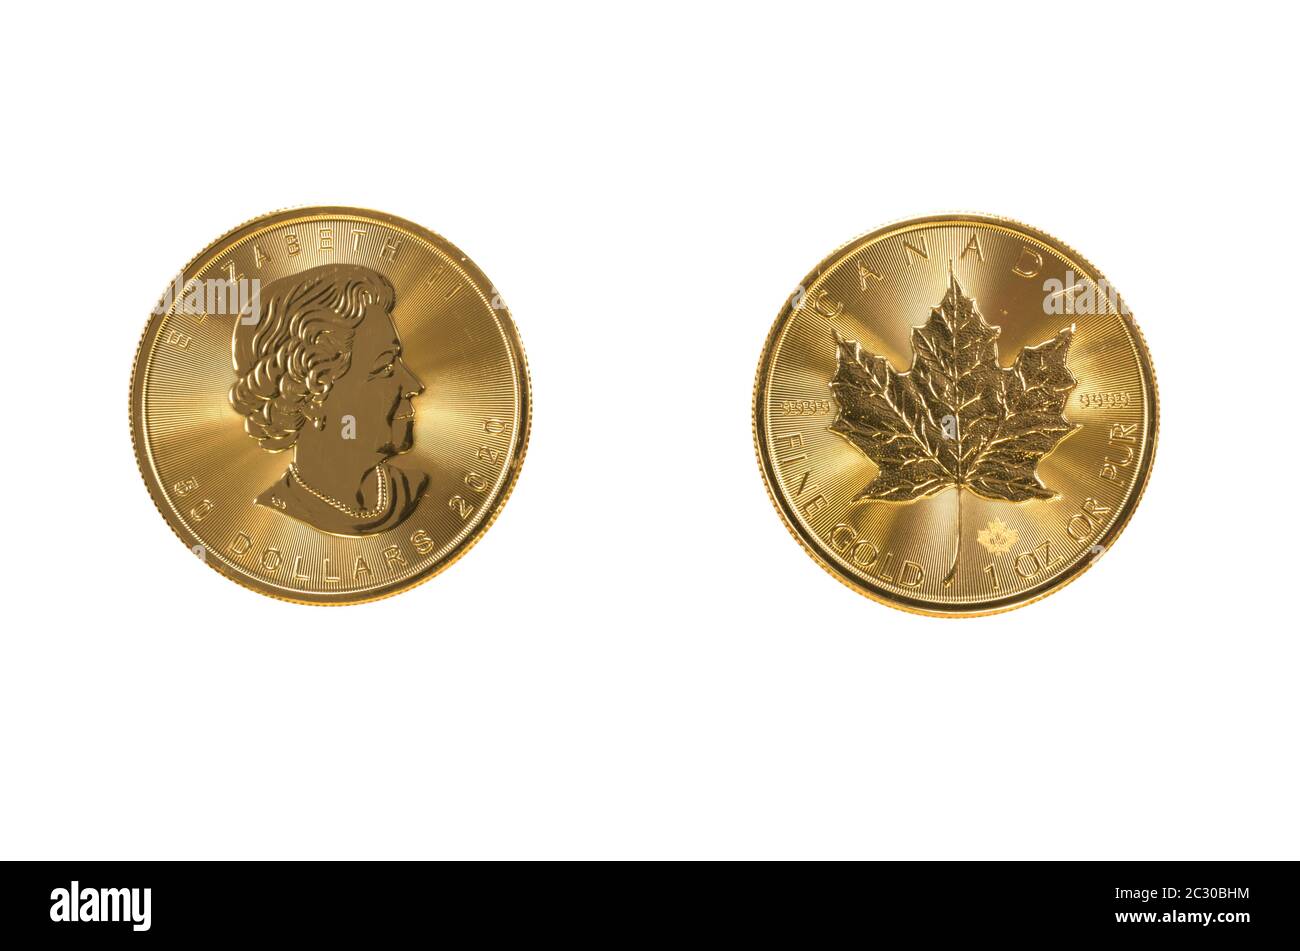 Moneta d'oro, 1 oncia, foglia d'acero Obverse Queen Elizabeth II e foglia d'acero inversa, Gran Bretagna Foto Stock